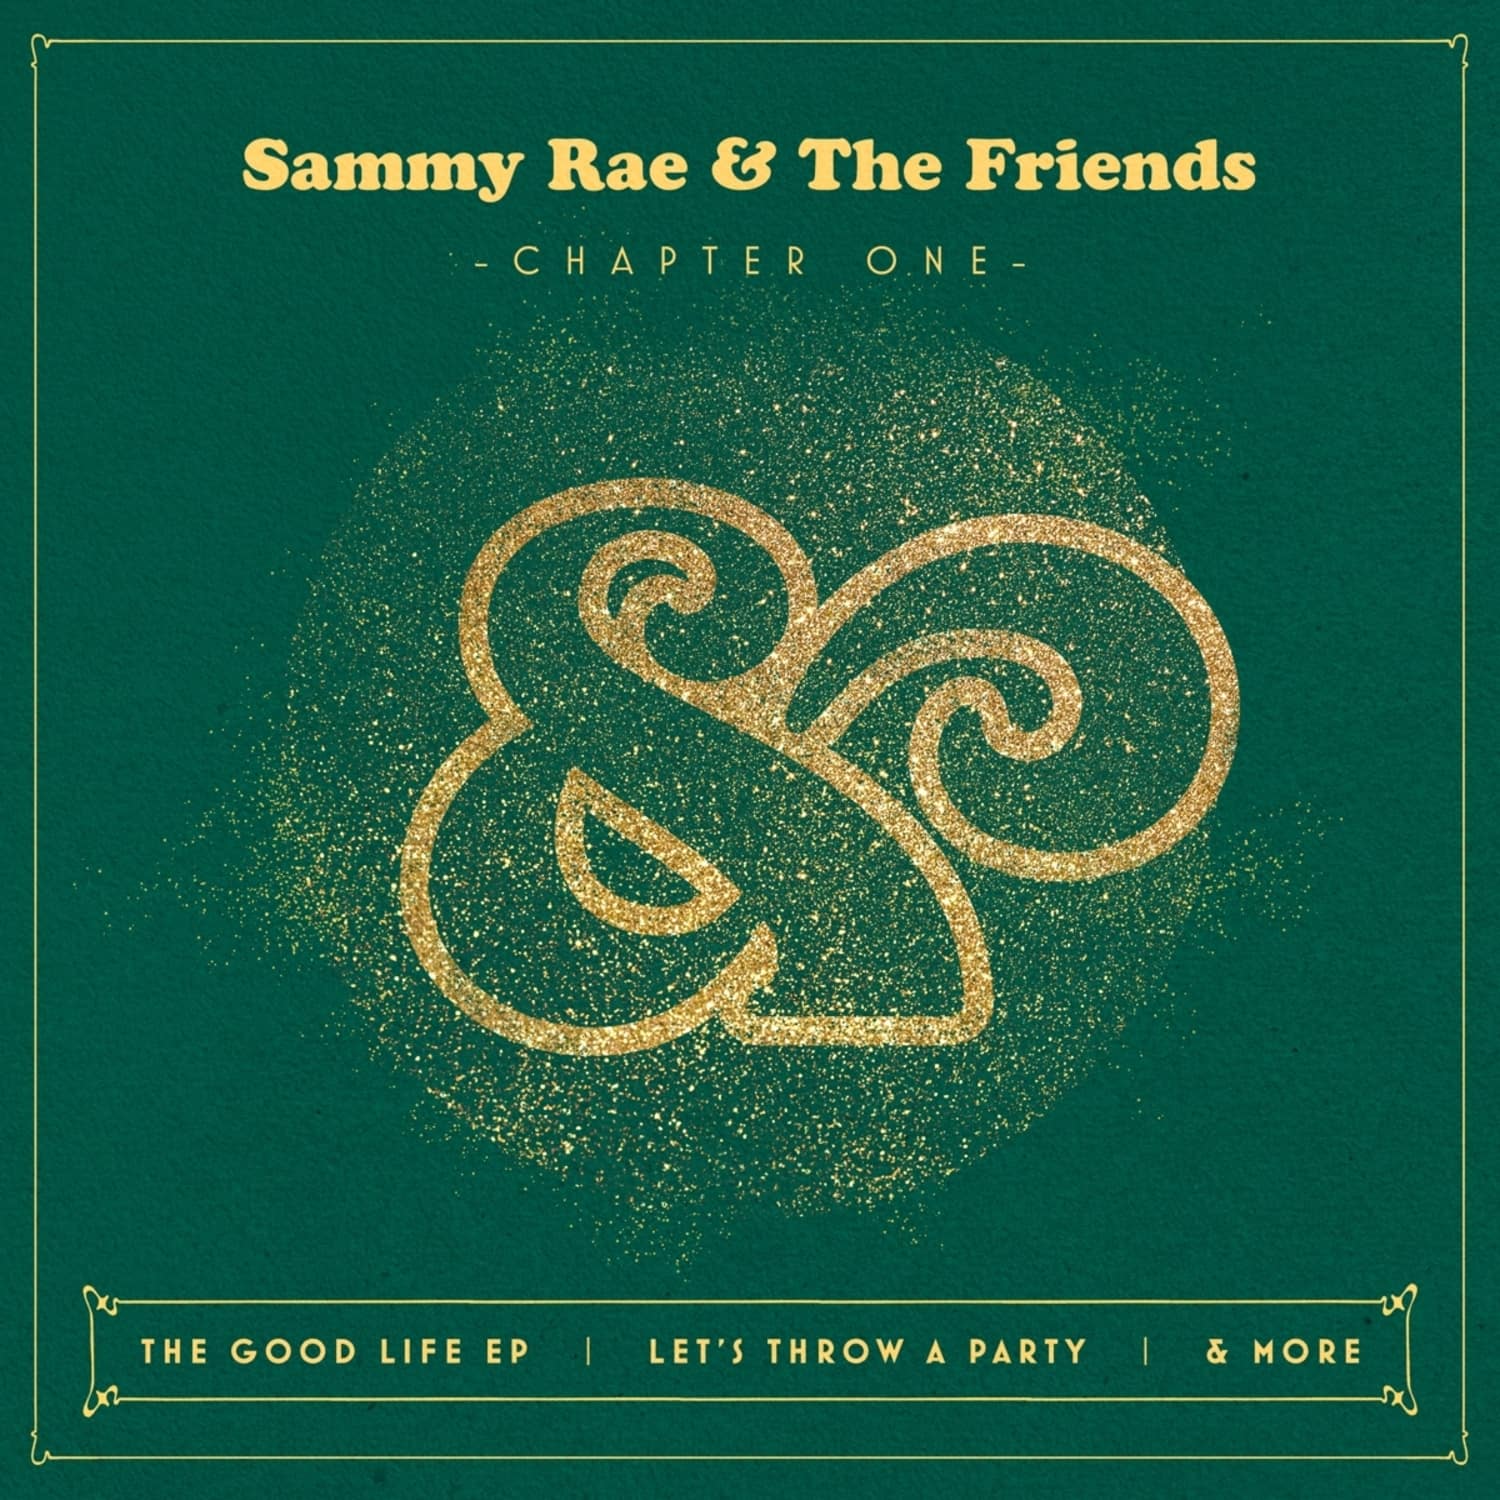  Sammy Rae & Friends - CHAPTER ONE 